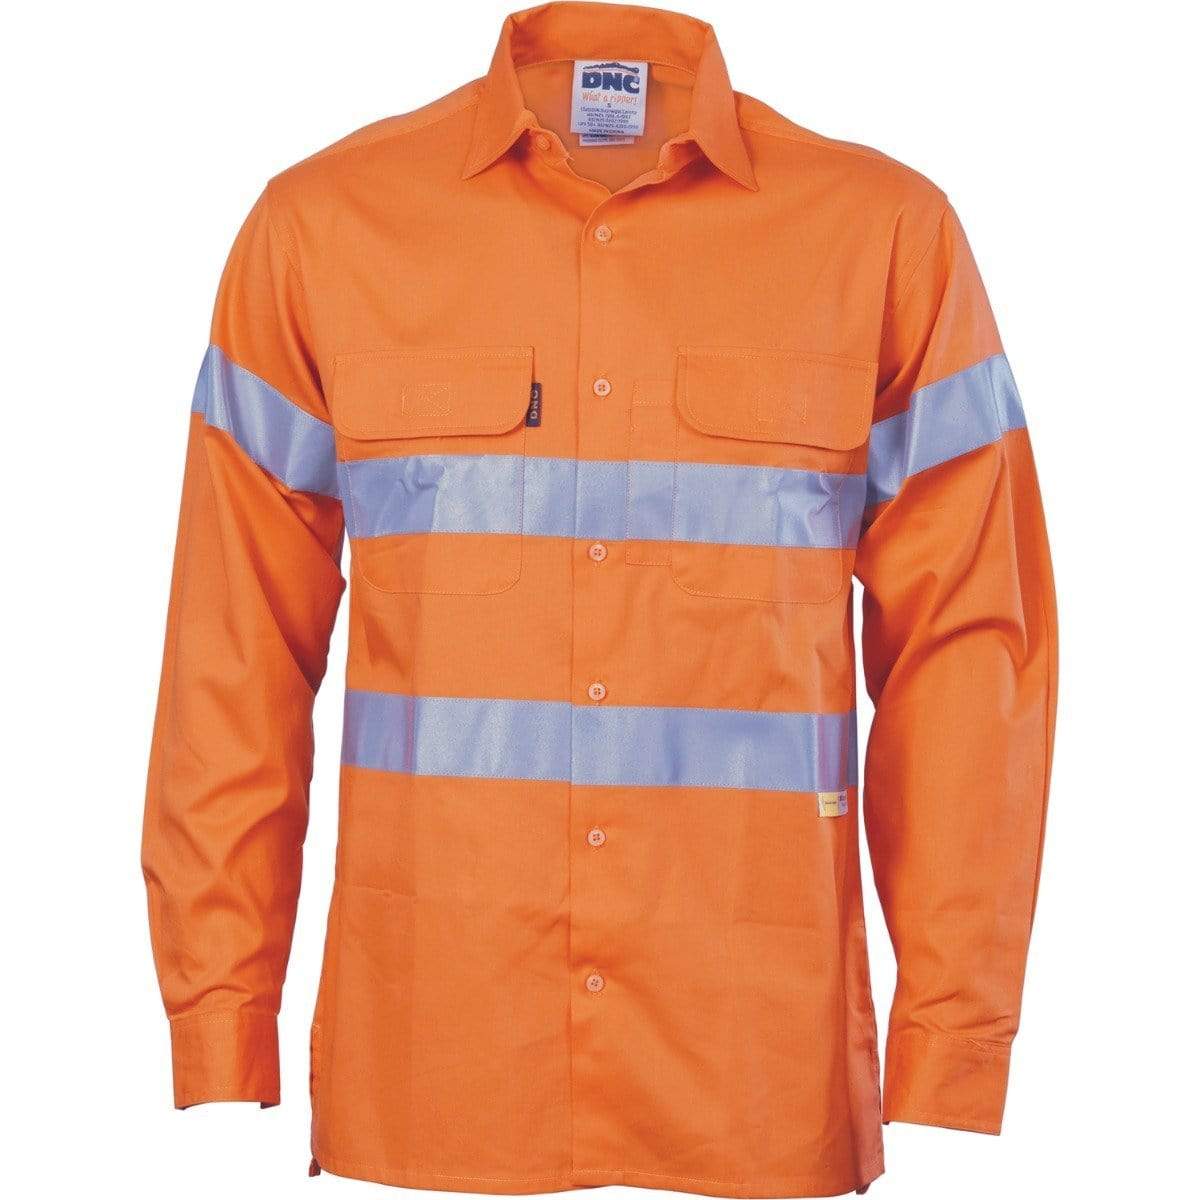 Dnc Workwear Hi-vis Cool-breeze Cotton Long Sleeve Shirt With 3m 8906 Reflective Tape - 3987 Work Wear DNC Workwear Orange S 